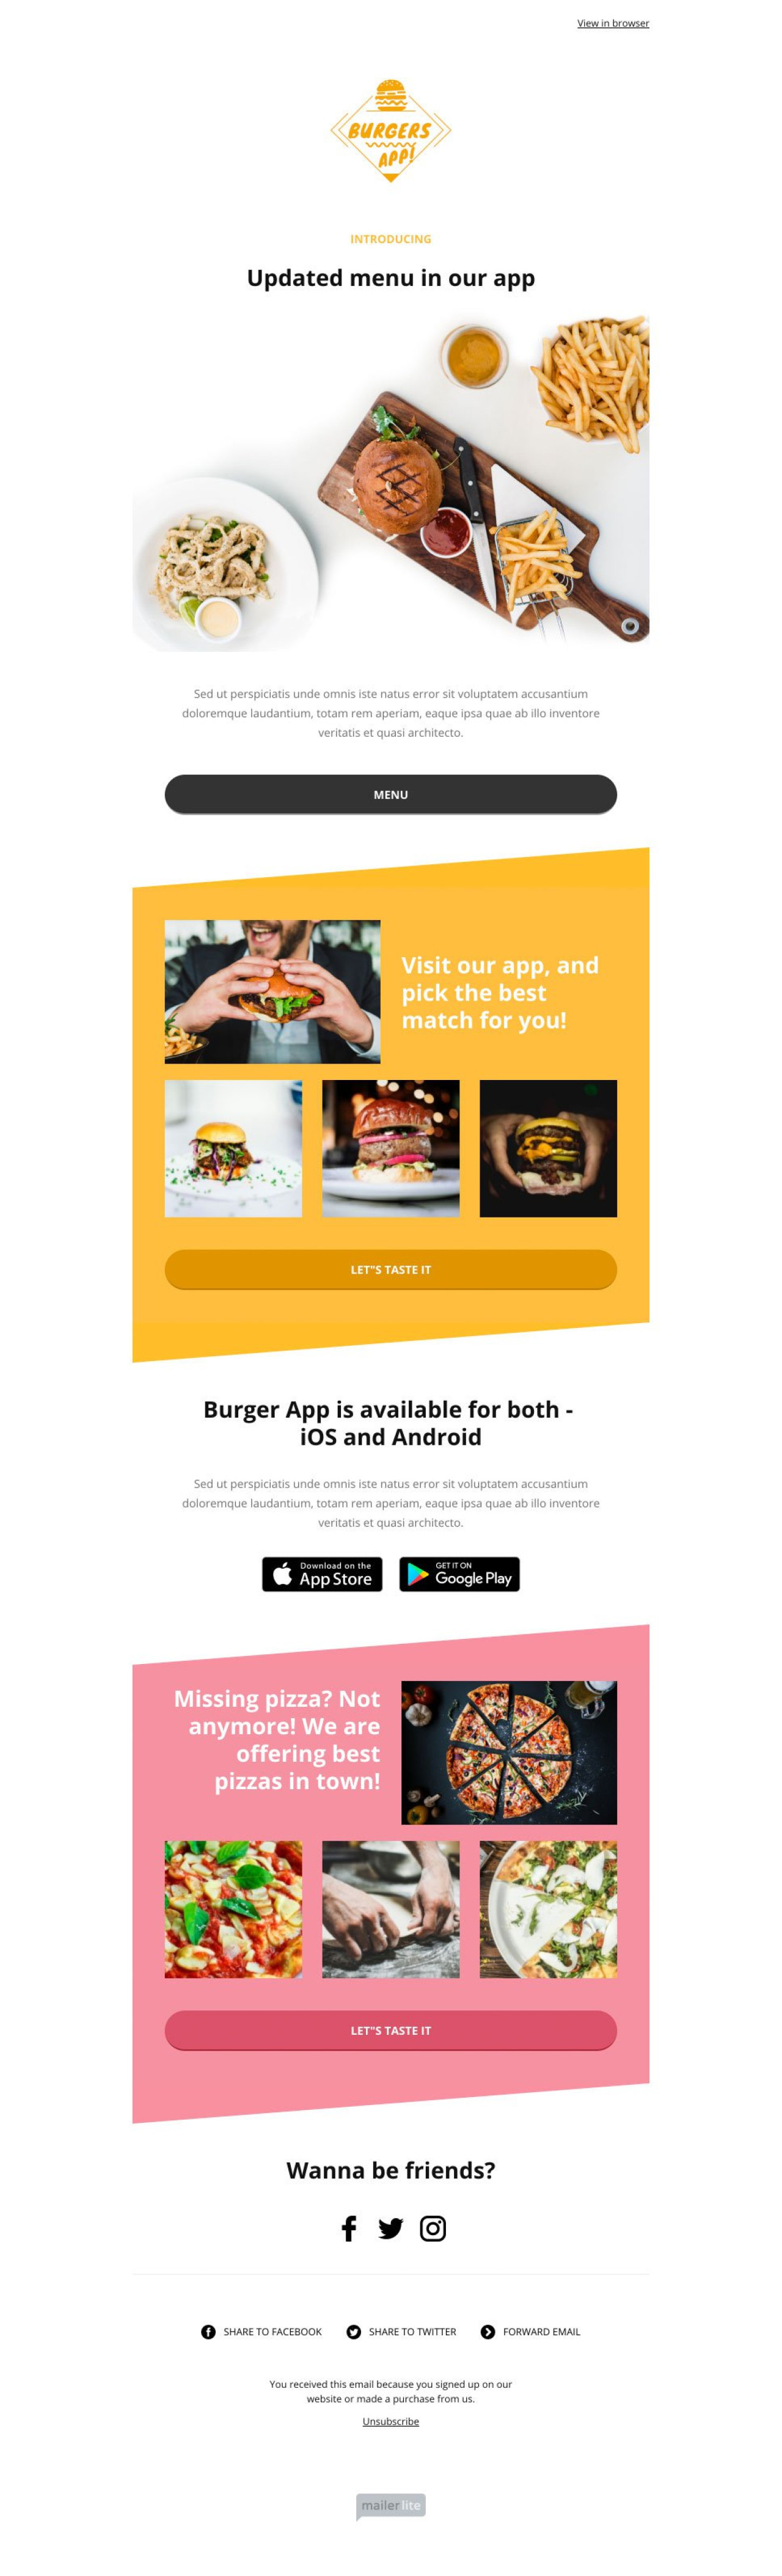 Food Menu App example - Made with MailerLite